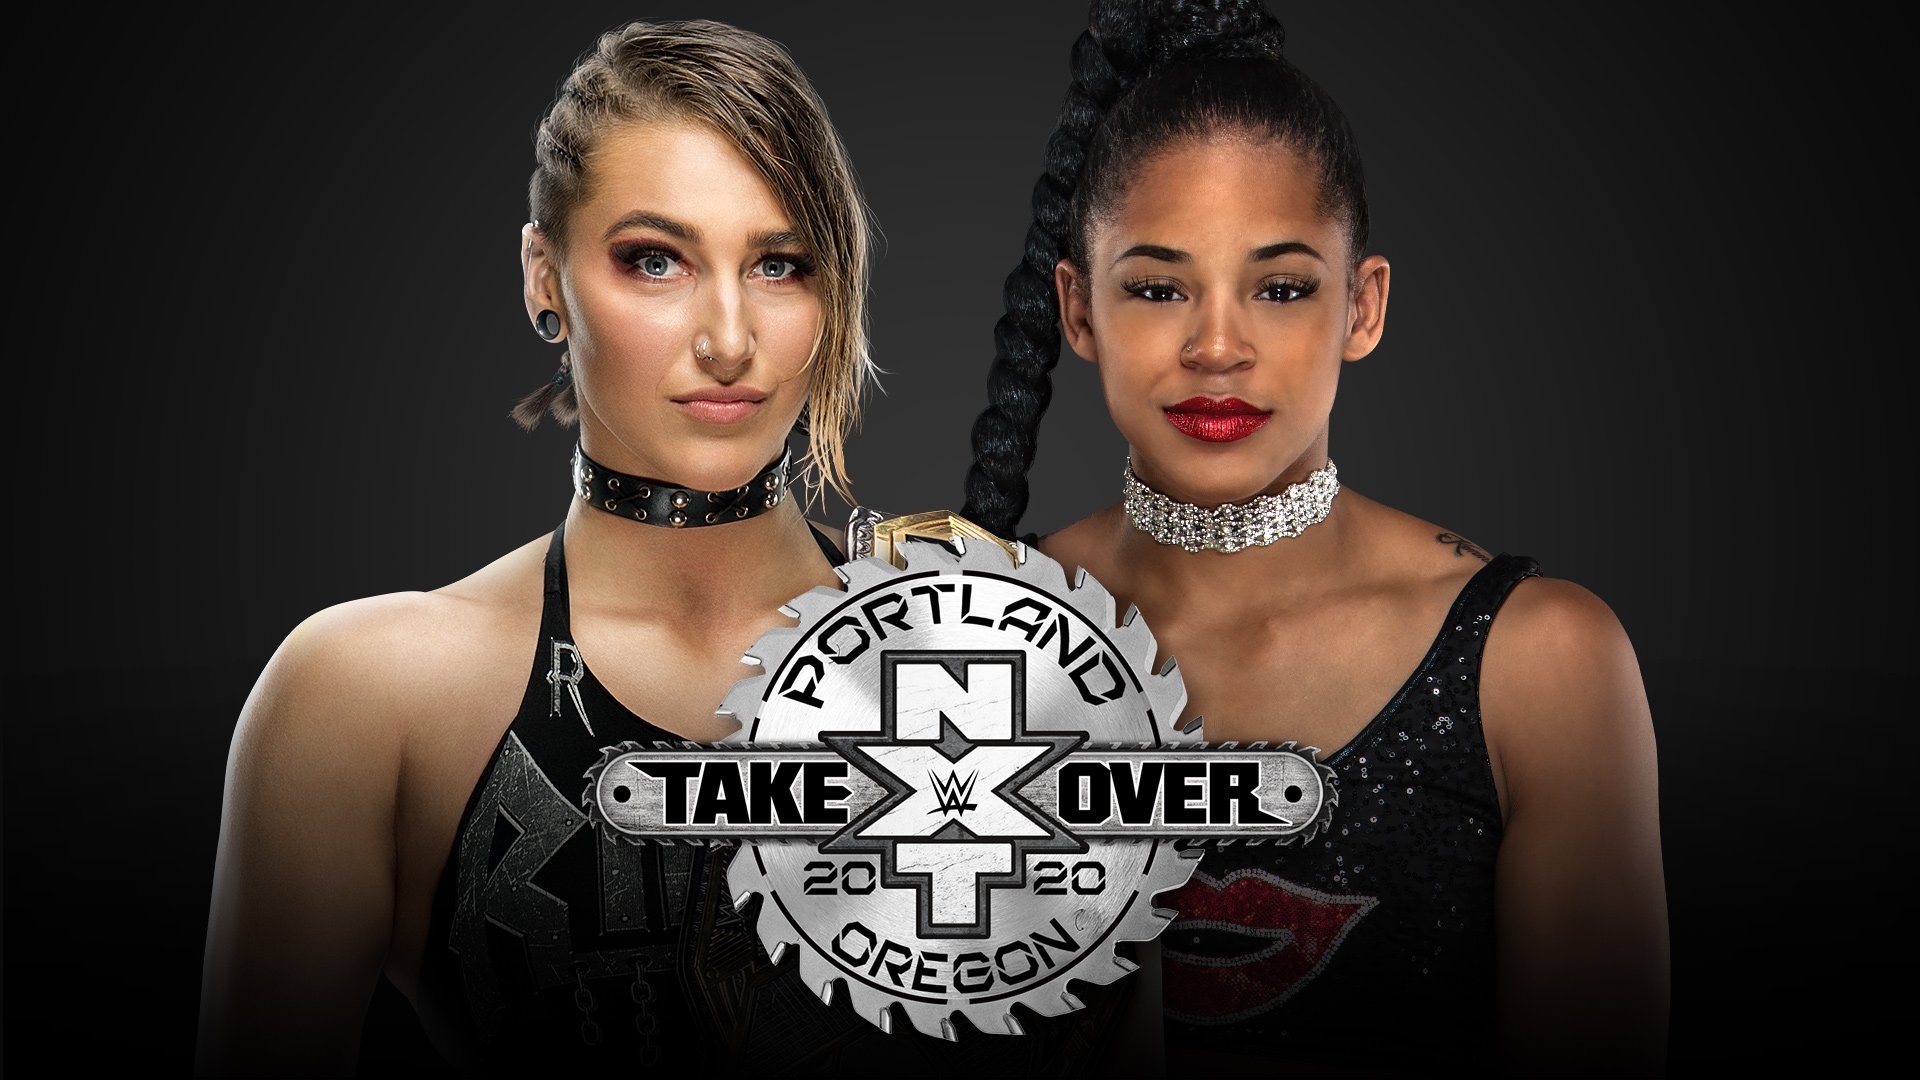 NXT TakeOver Portland: Rhea Ripley vs Bianca Belair